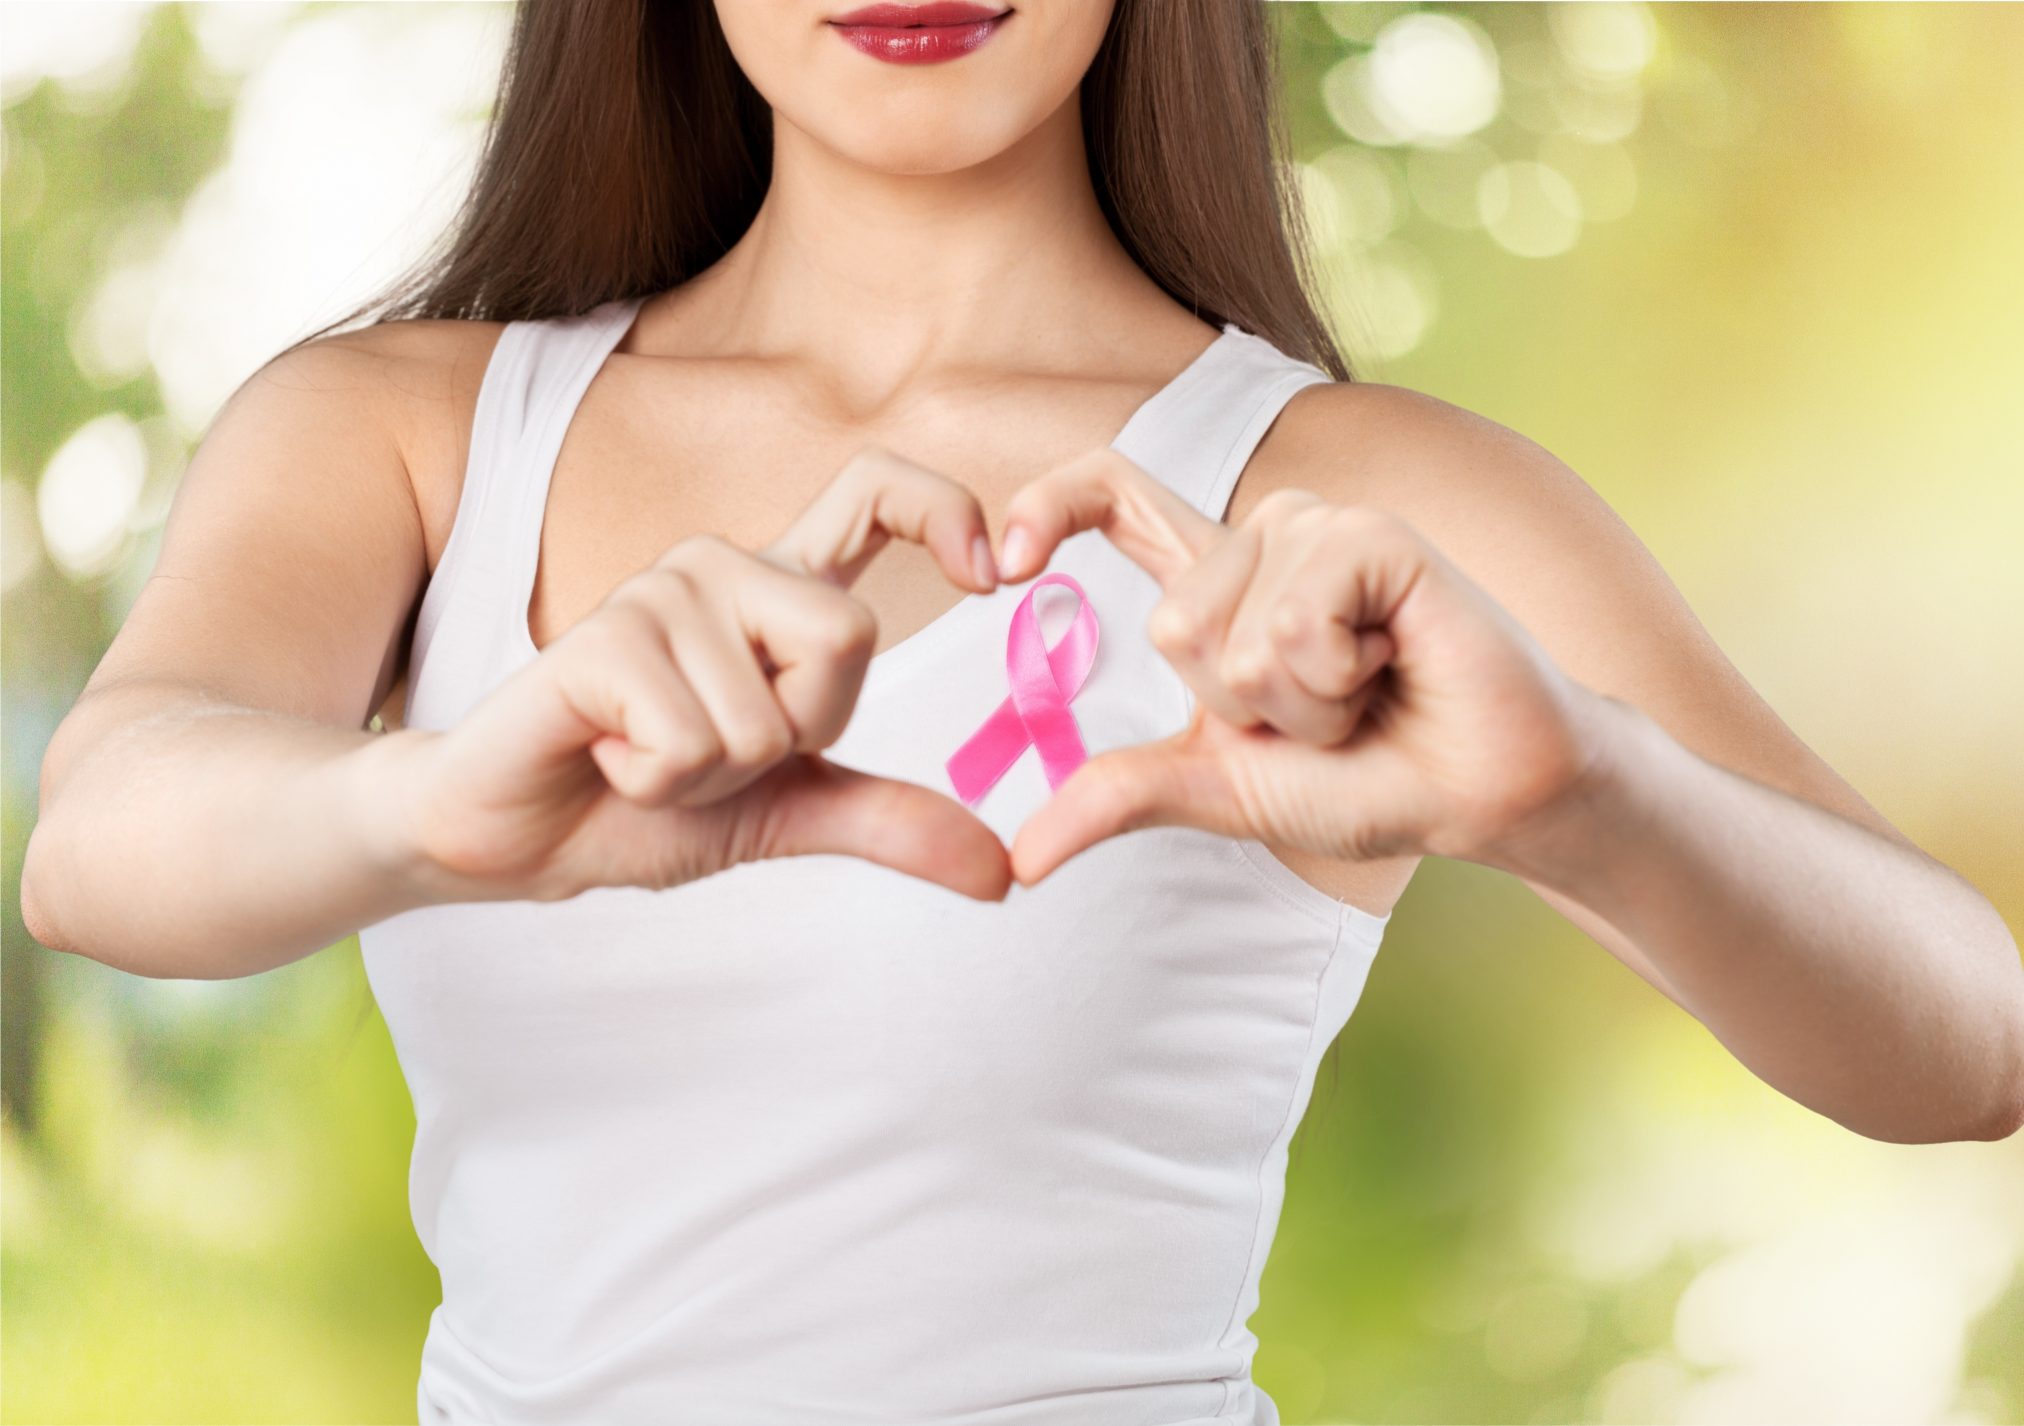 SABCS: Breast Cancer Outcomes Worse for Blacks Despite Similar Gene RS